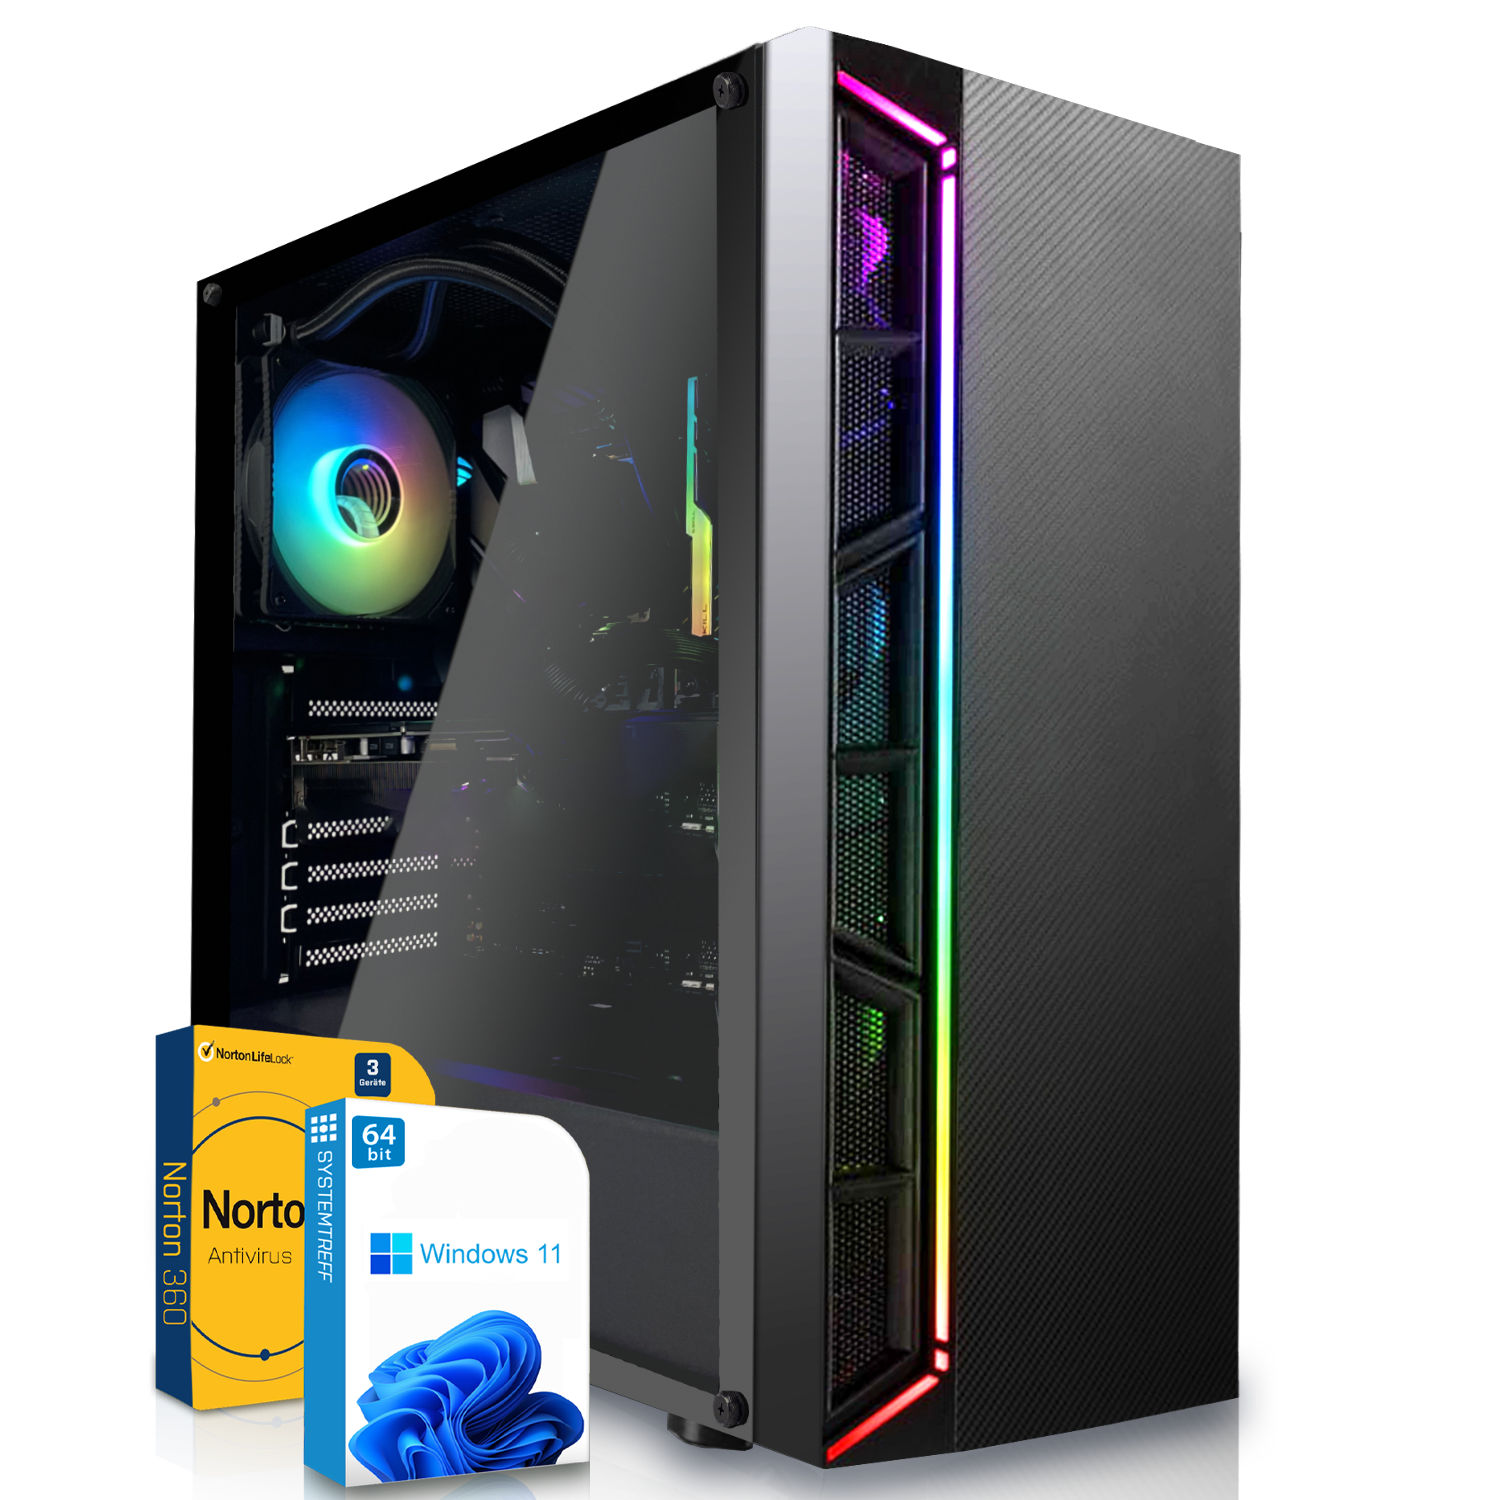 SYSTEMTREFF Gaming 1650 16 Pro, mSSD, AMD GTX 512 Prozessor, 5 AMD mit Gaming PC NVIDIA GB GB RAM, GeForce® Ryzen 5 4500, 11 Ryzen™ Windows